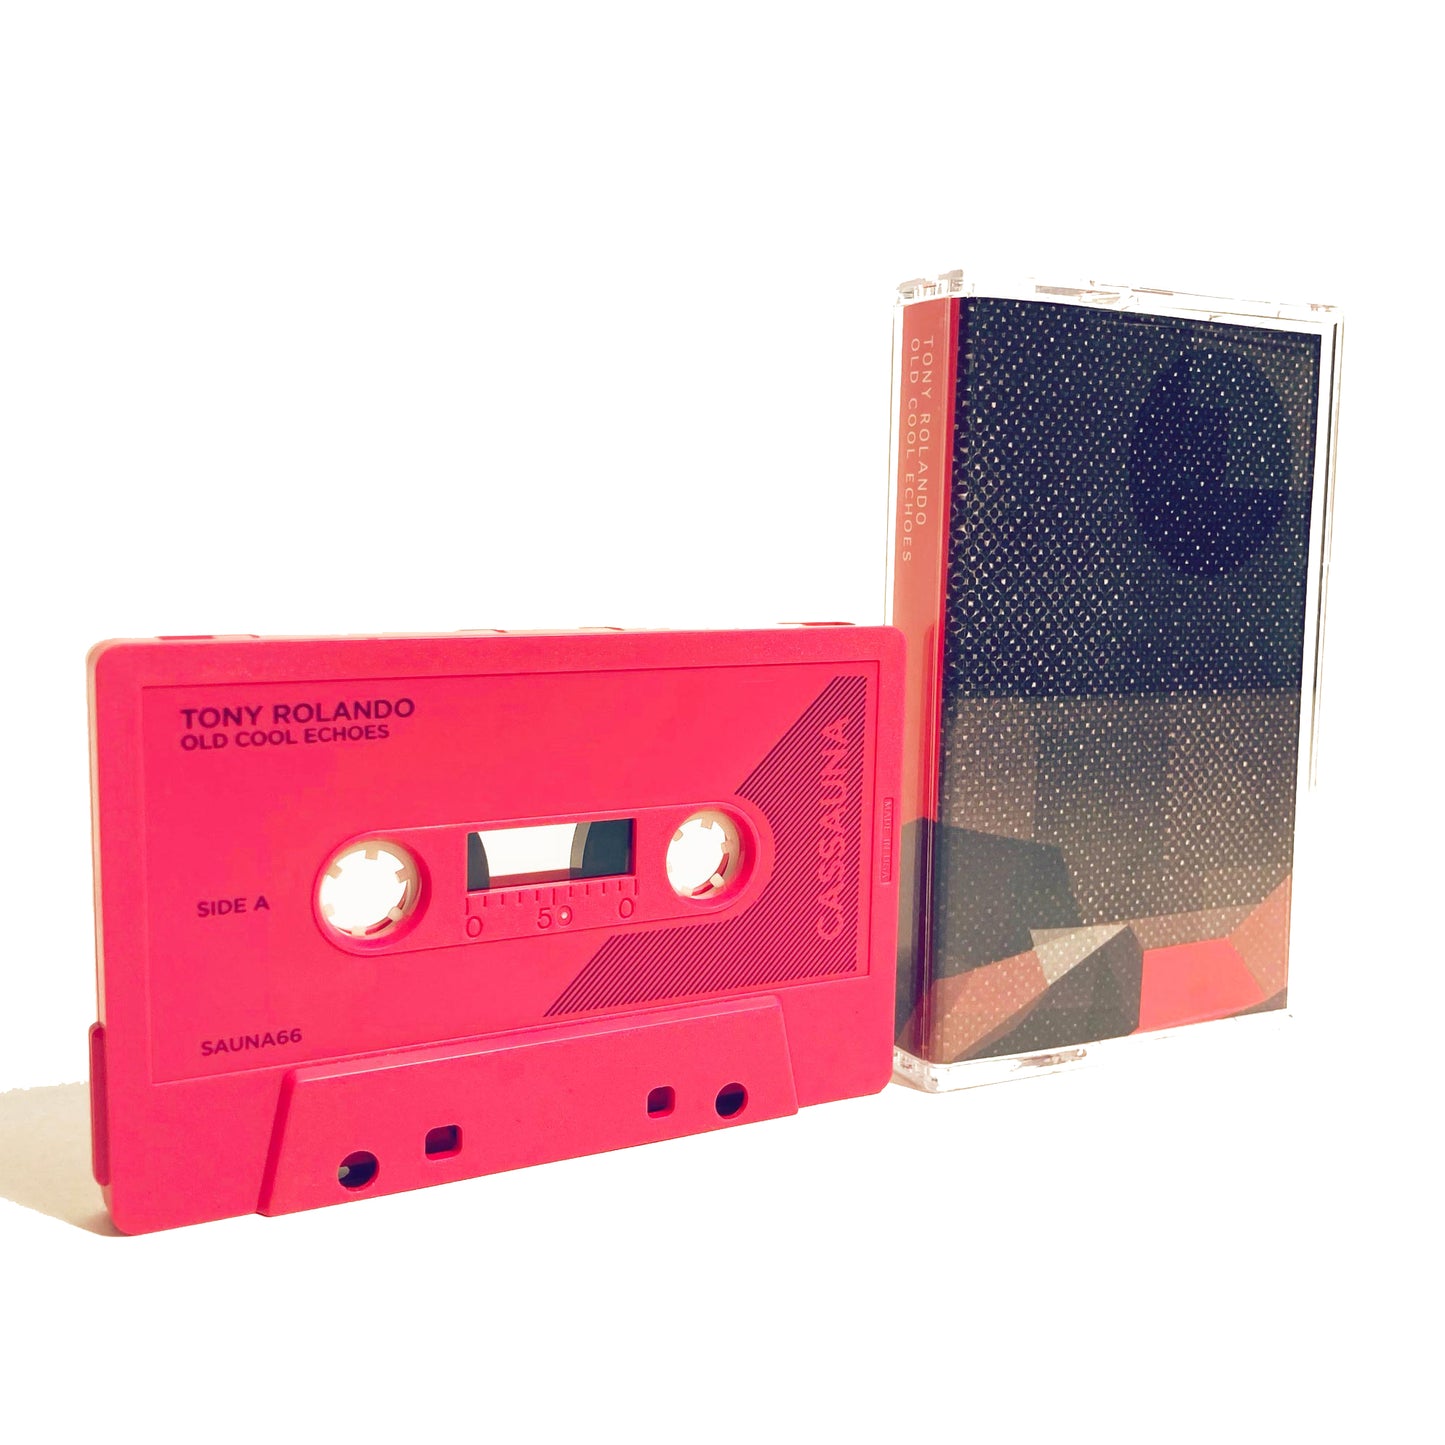 Tony Rolando - Old Cool Echoes - Cassette